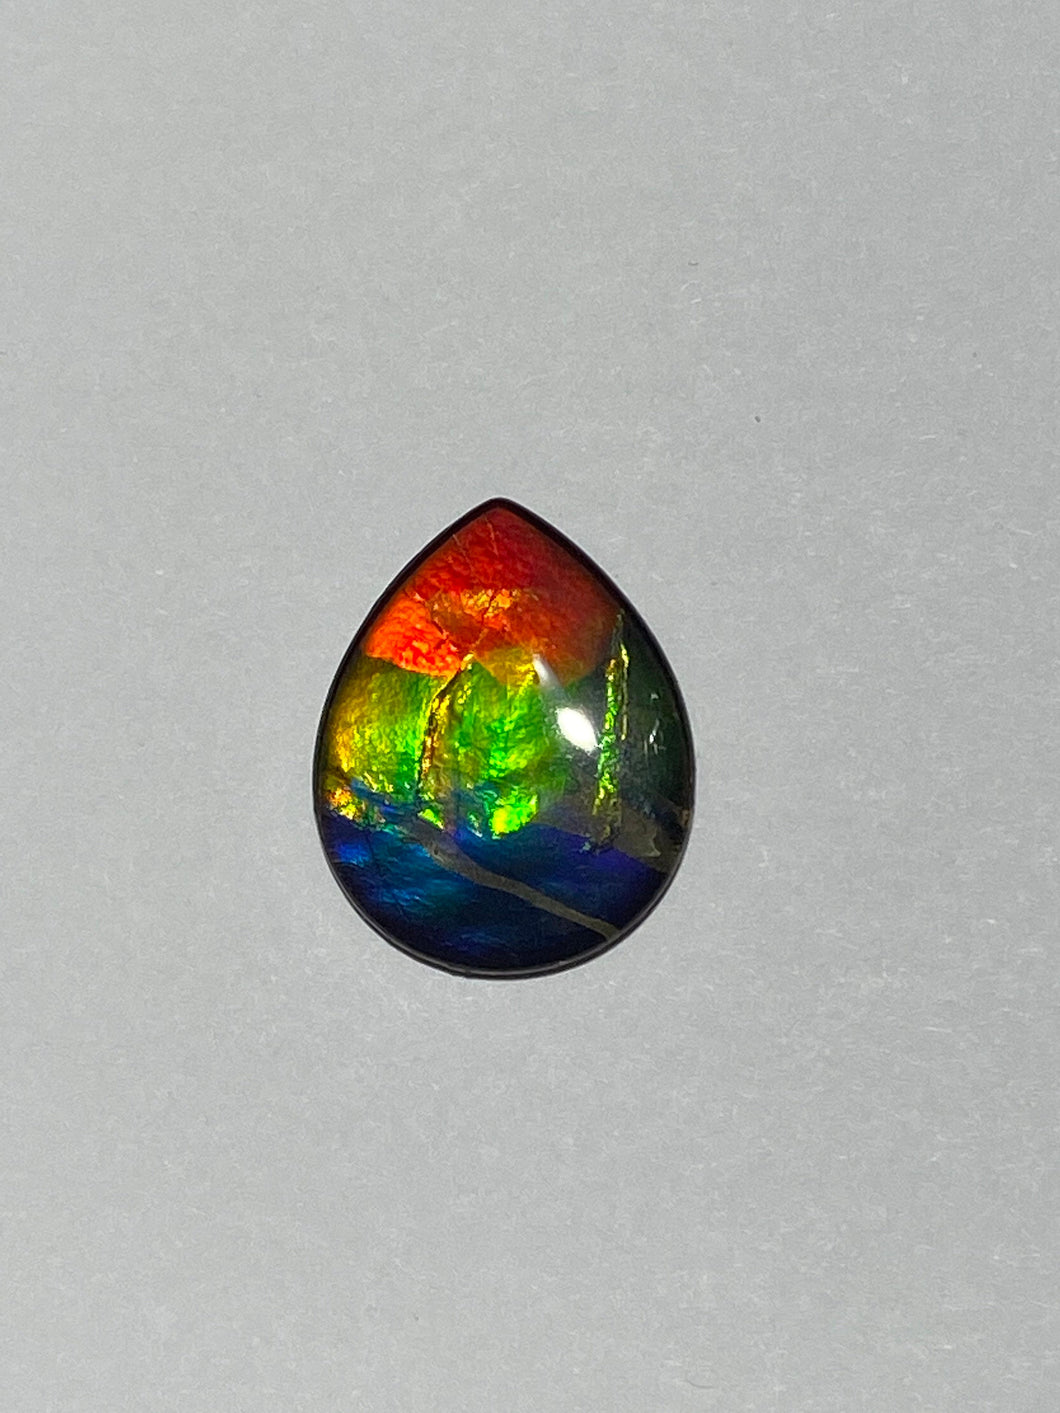 Stunning Rainbow ammolite gemstone 20x15 tear drop AAA+